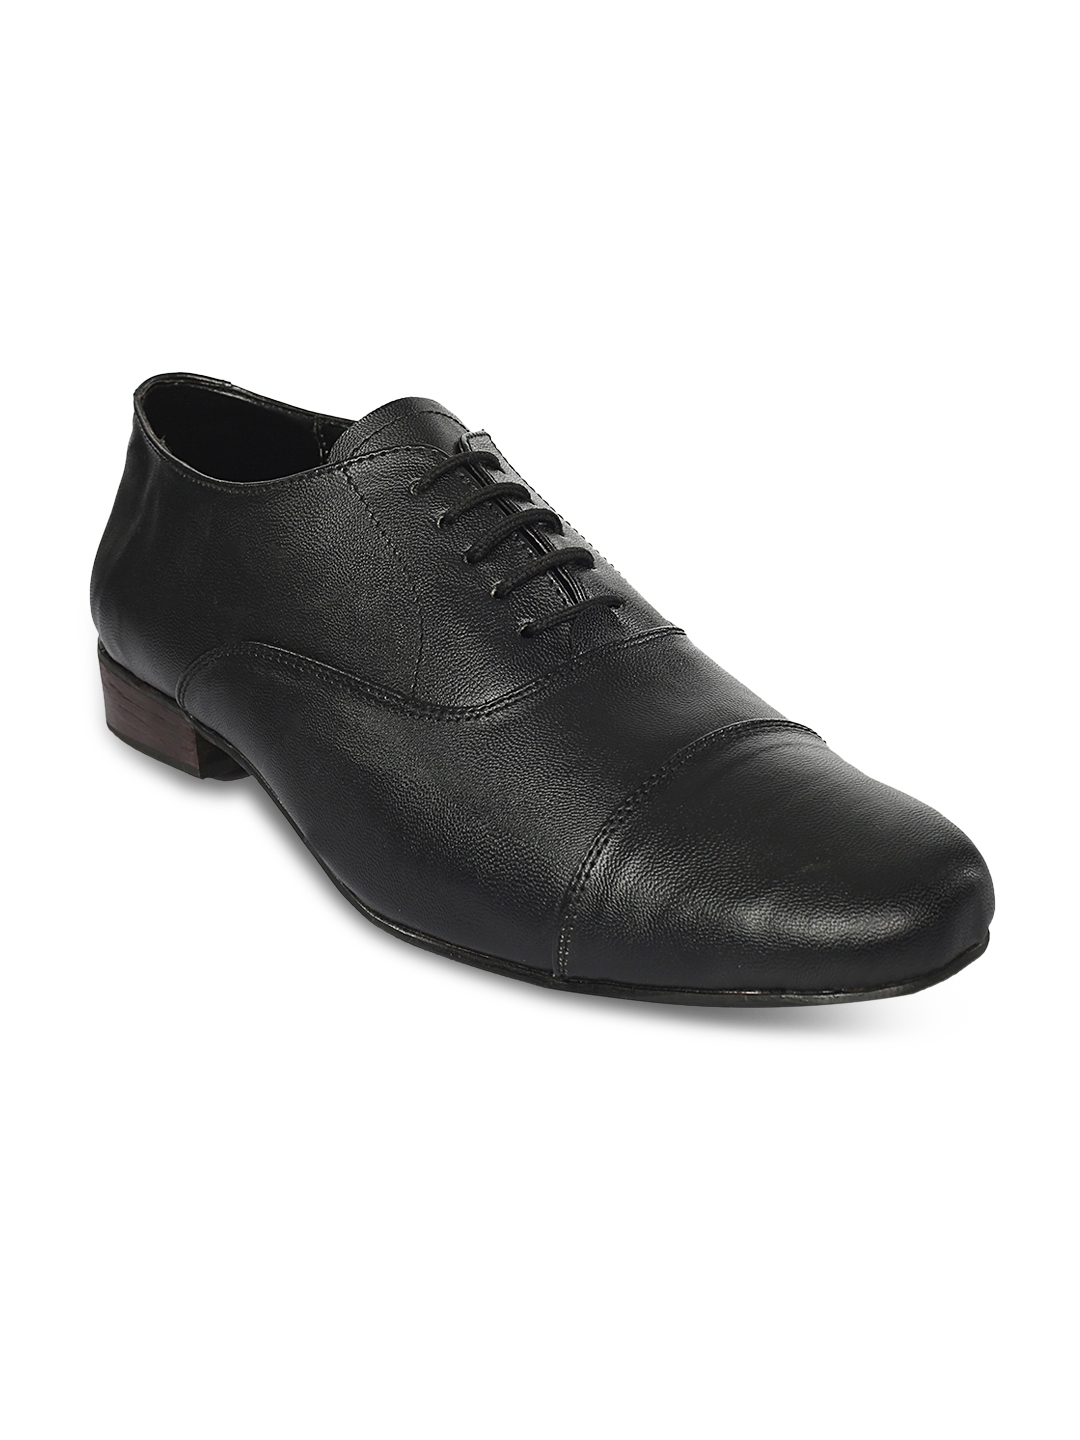 Buy Claude Lorrain Men Black Formal Shoes - Formal Shoes for Men 694785 ...